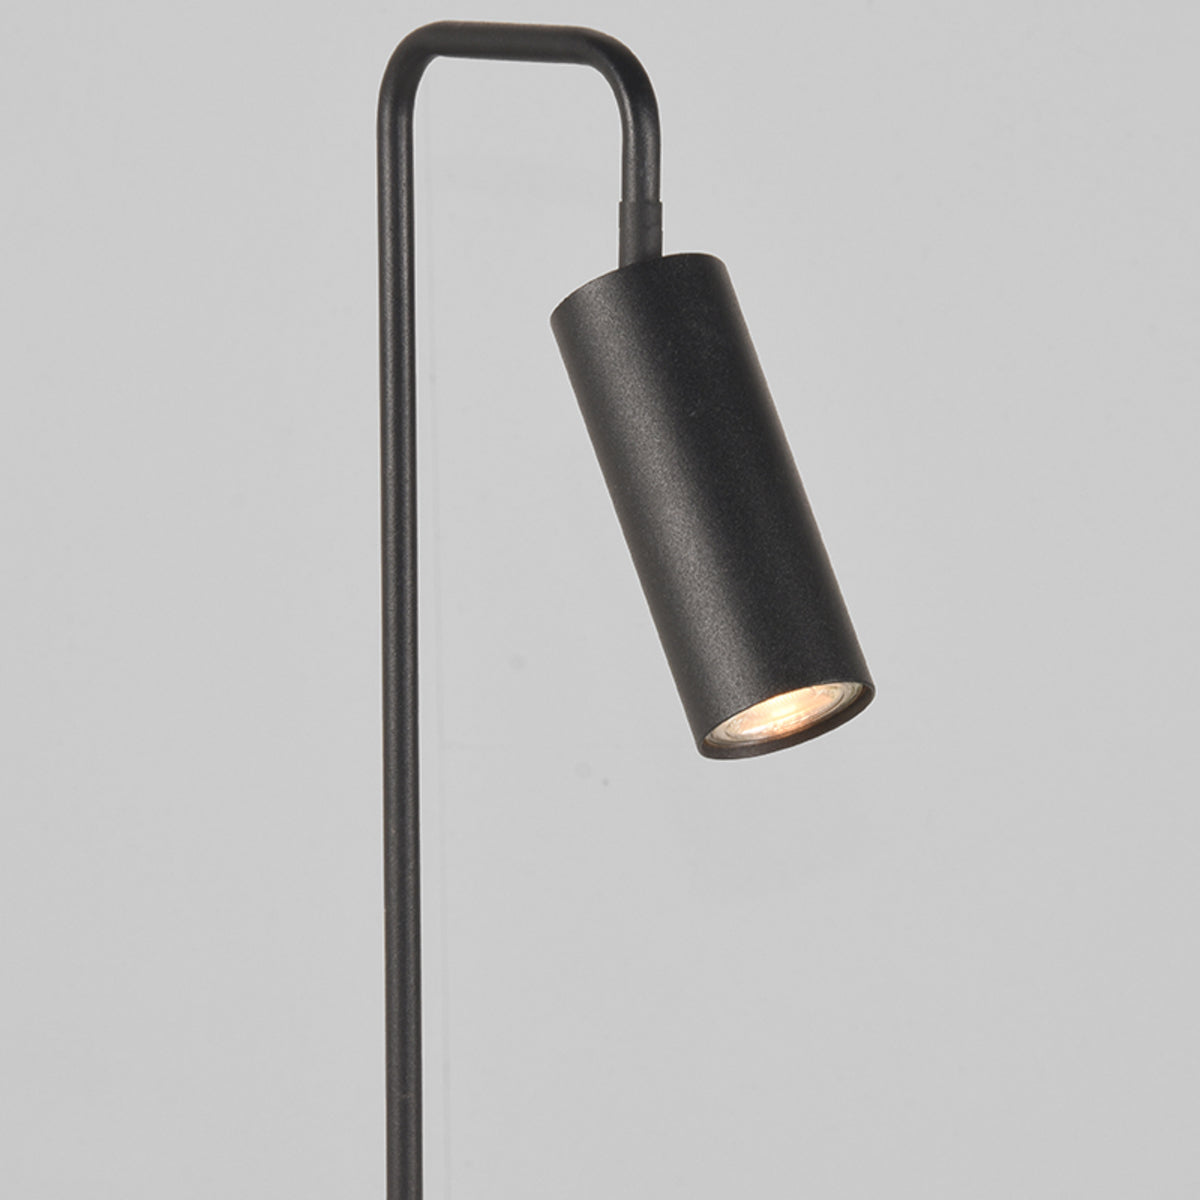 LABEL51 Table lamp Ferroli - Black - Metal